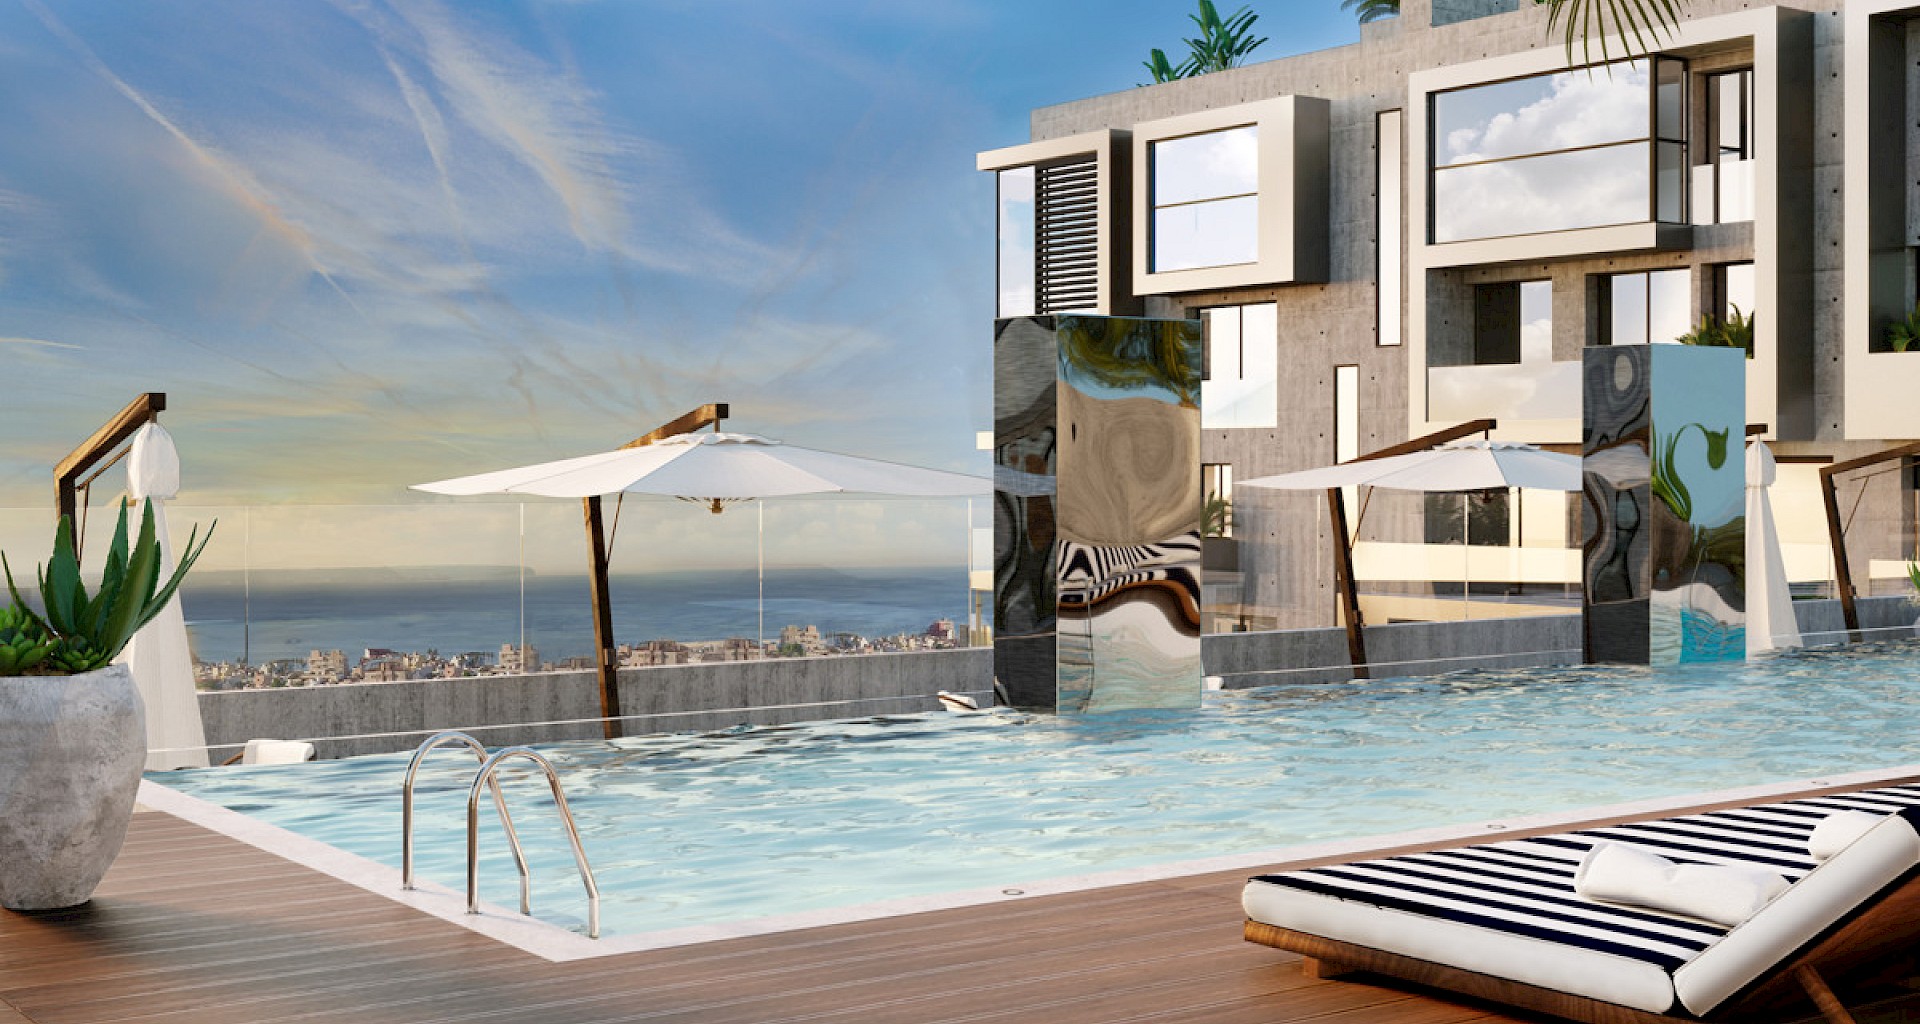 KROHN & LUEDEMANN New luxury flats in Palma close to Portixol beach Top cam poll v design change F 